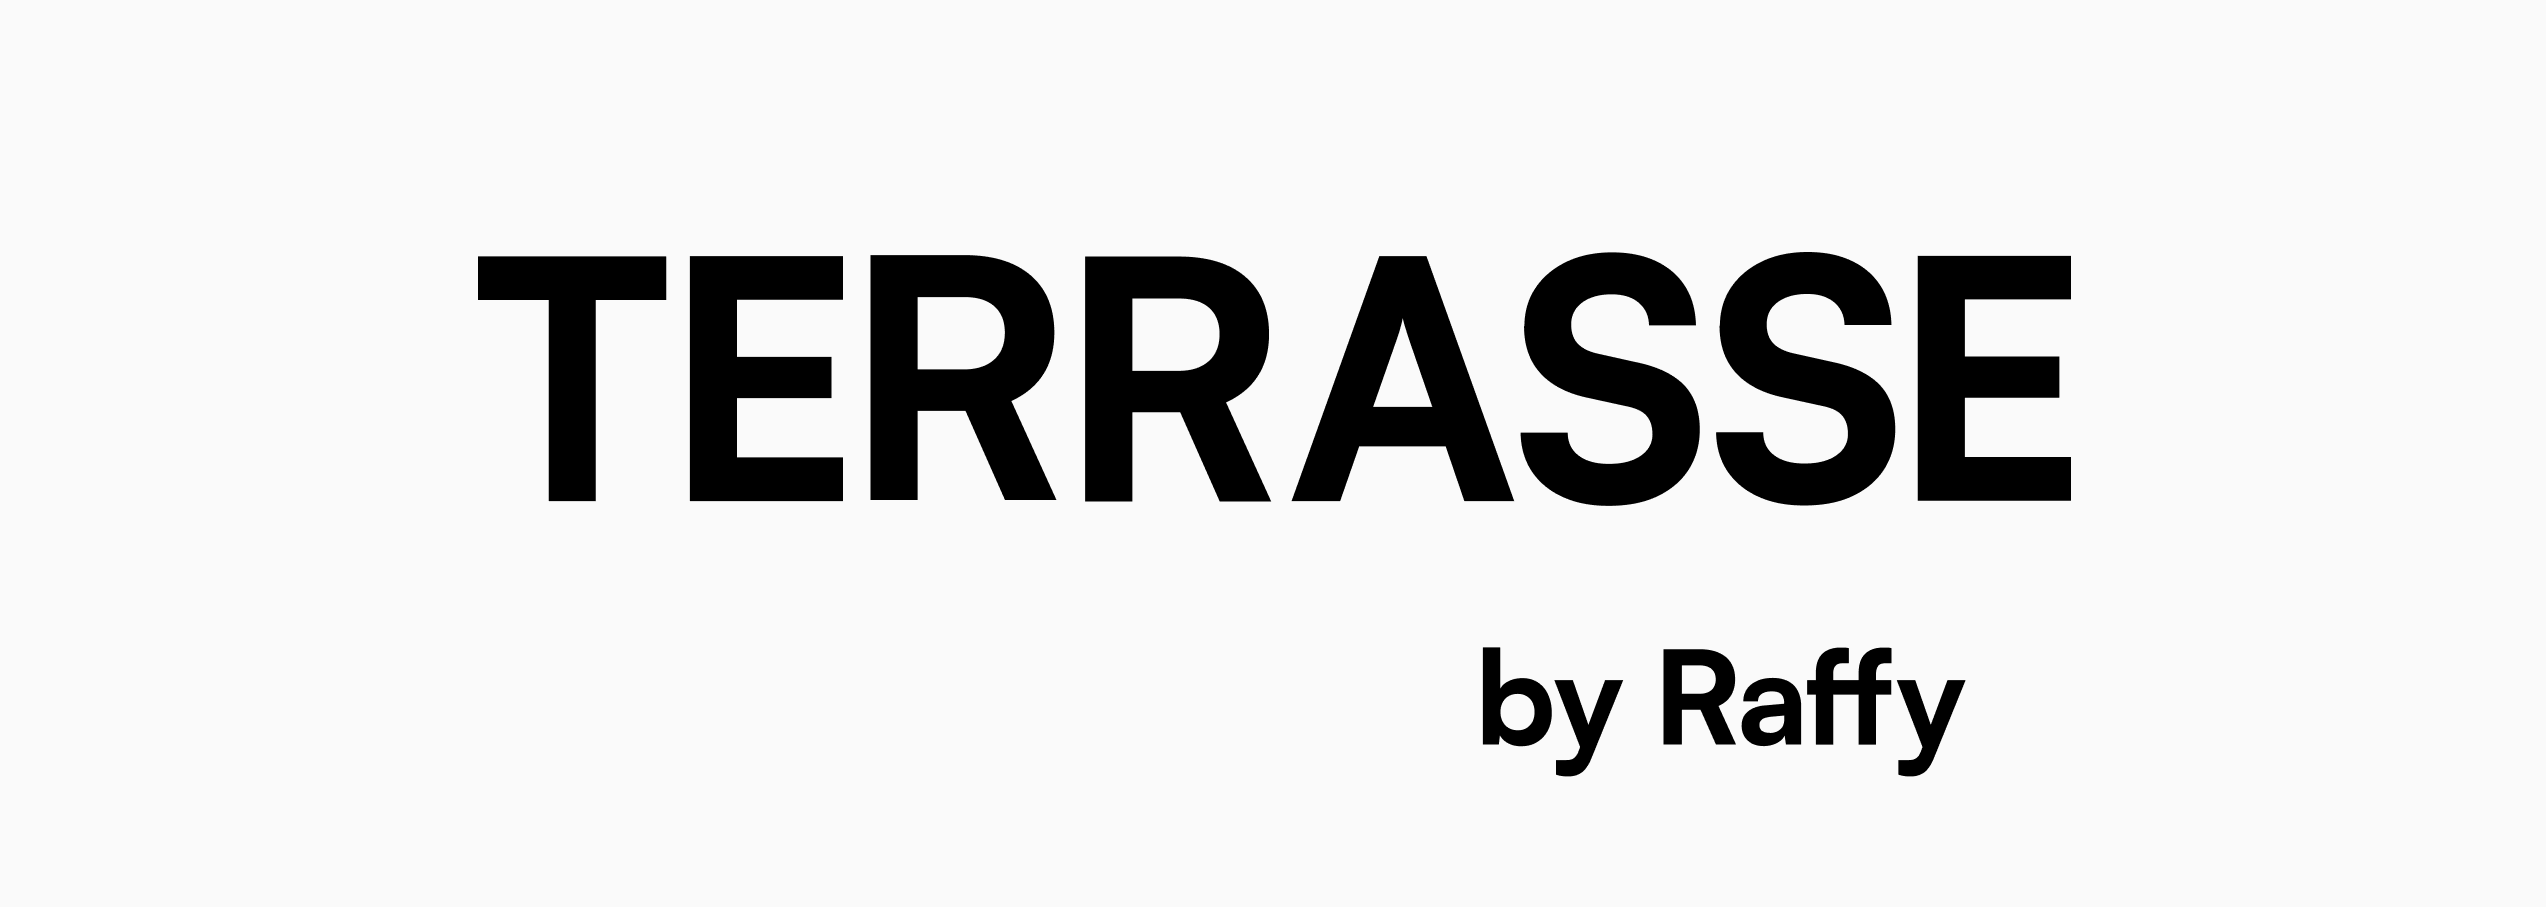 Terrasse Bar wordmark